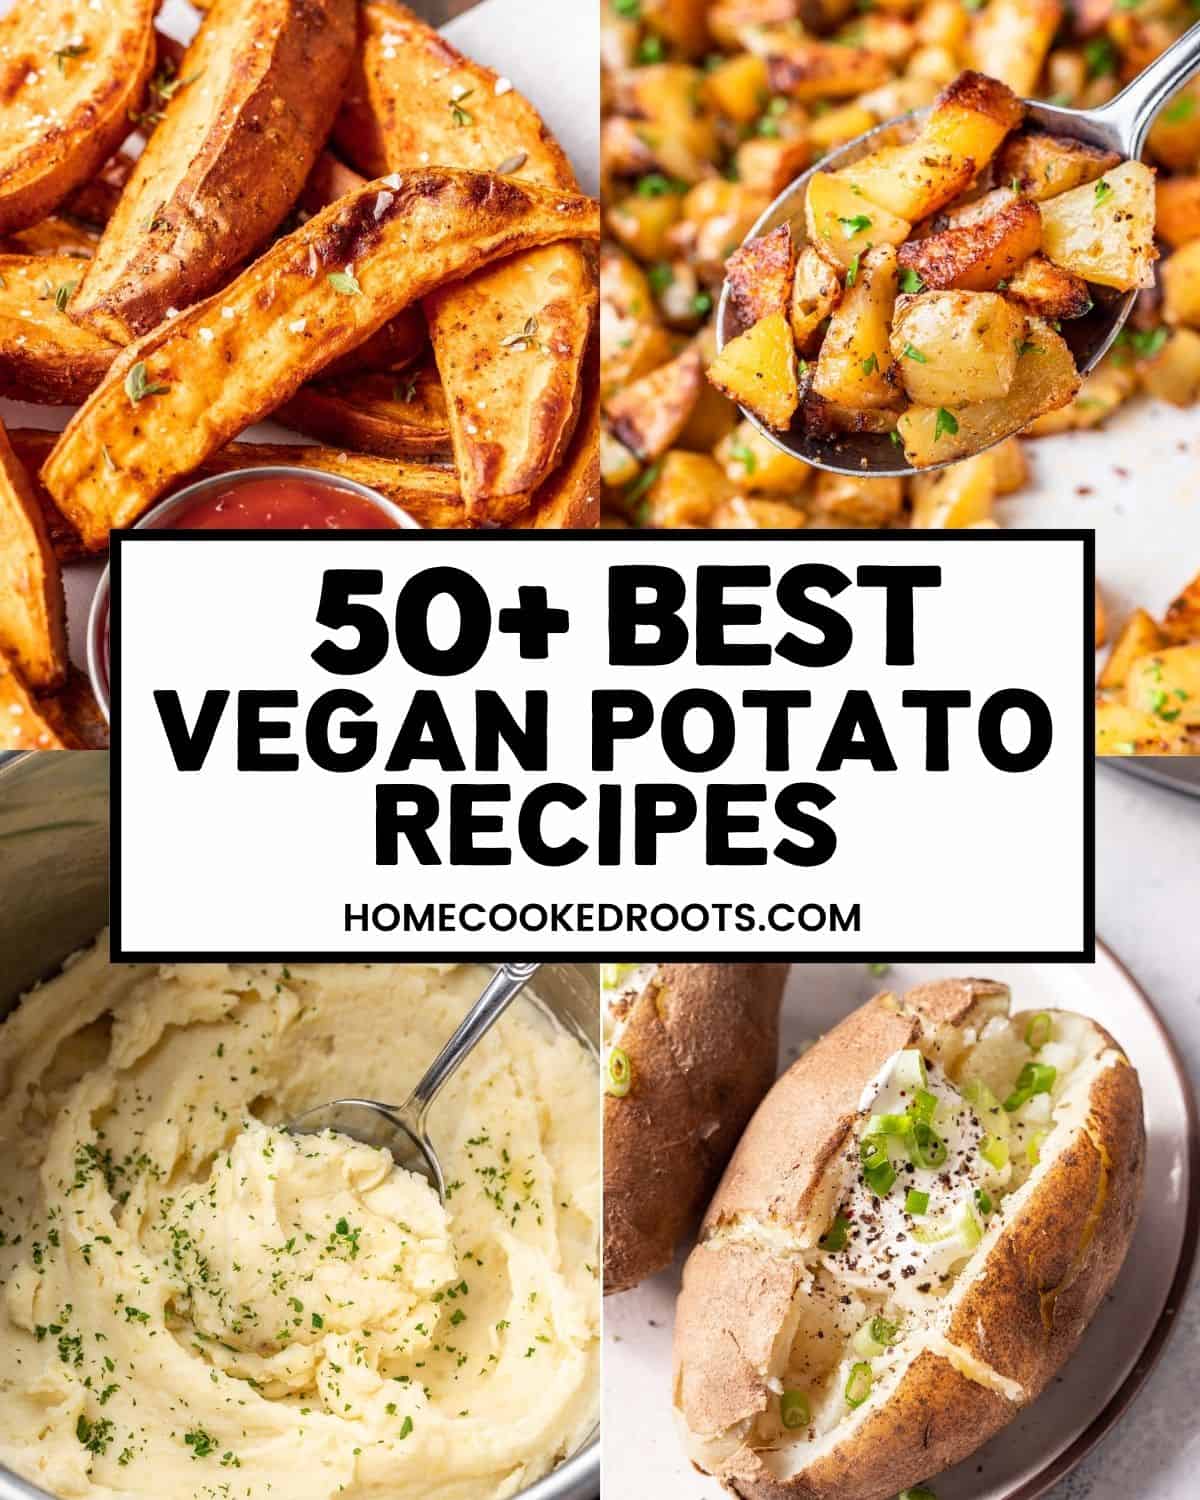 Collage of 4 vegan potato recipes with text that reads, 50+ best Vegan potato recipes.